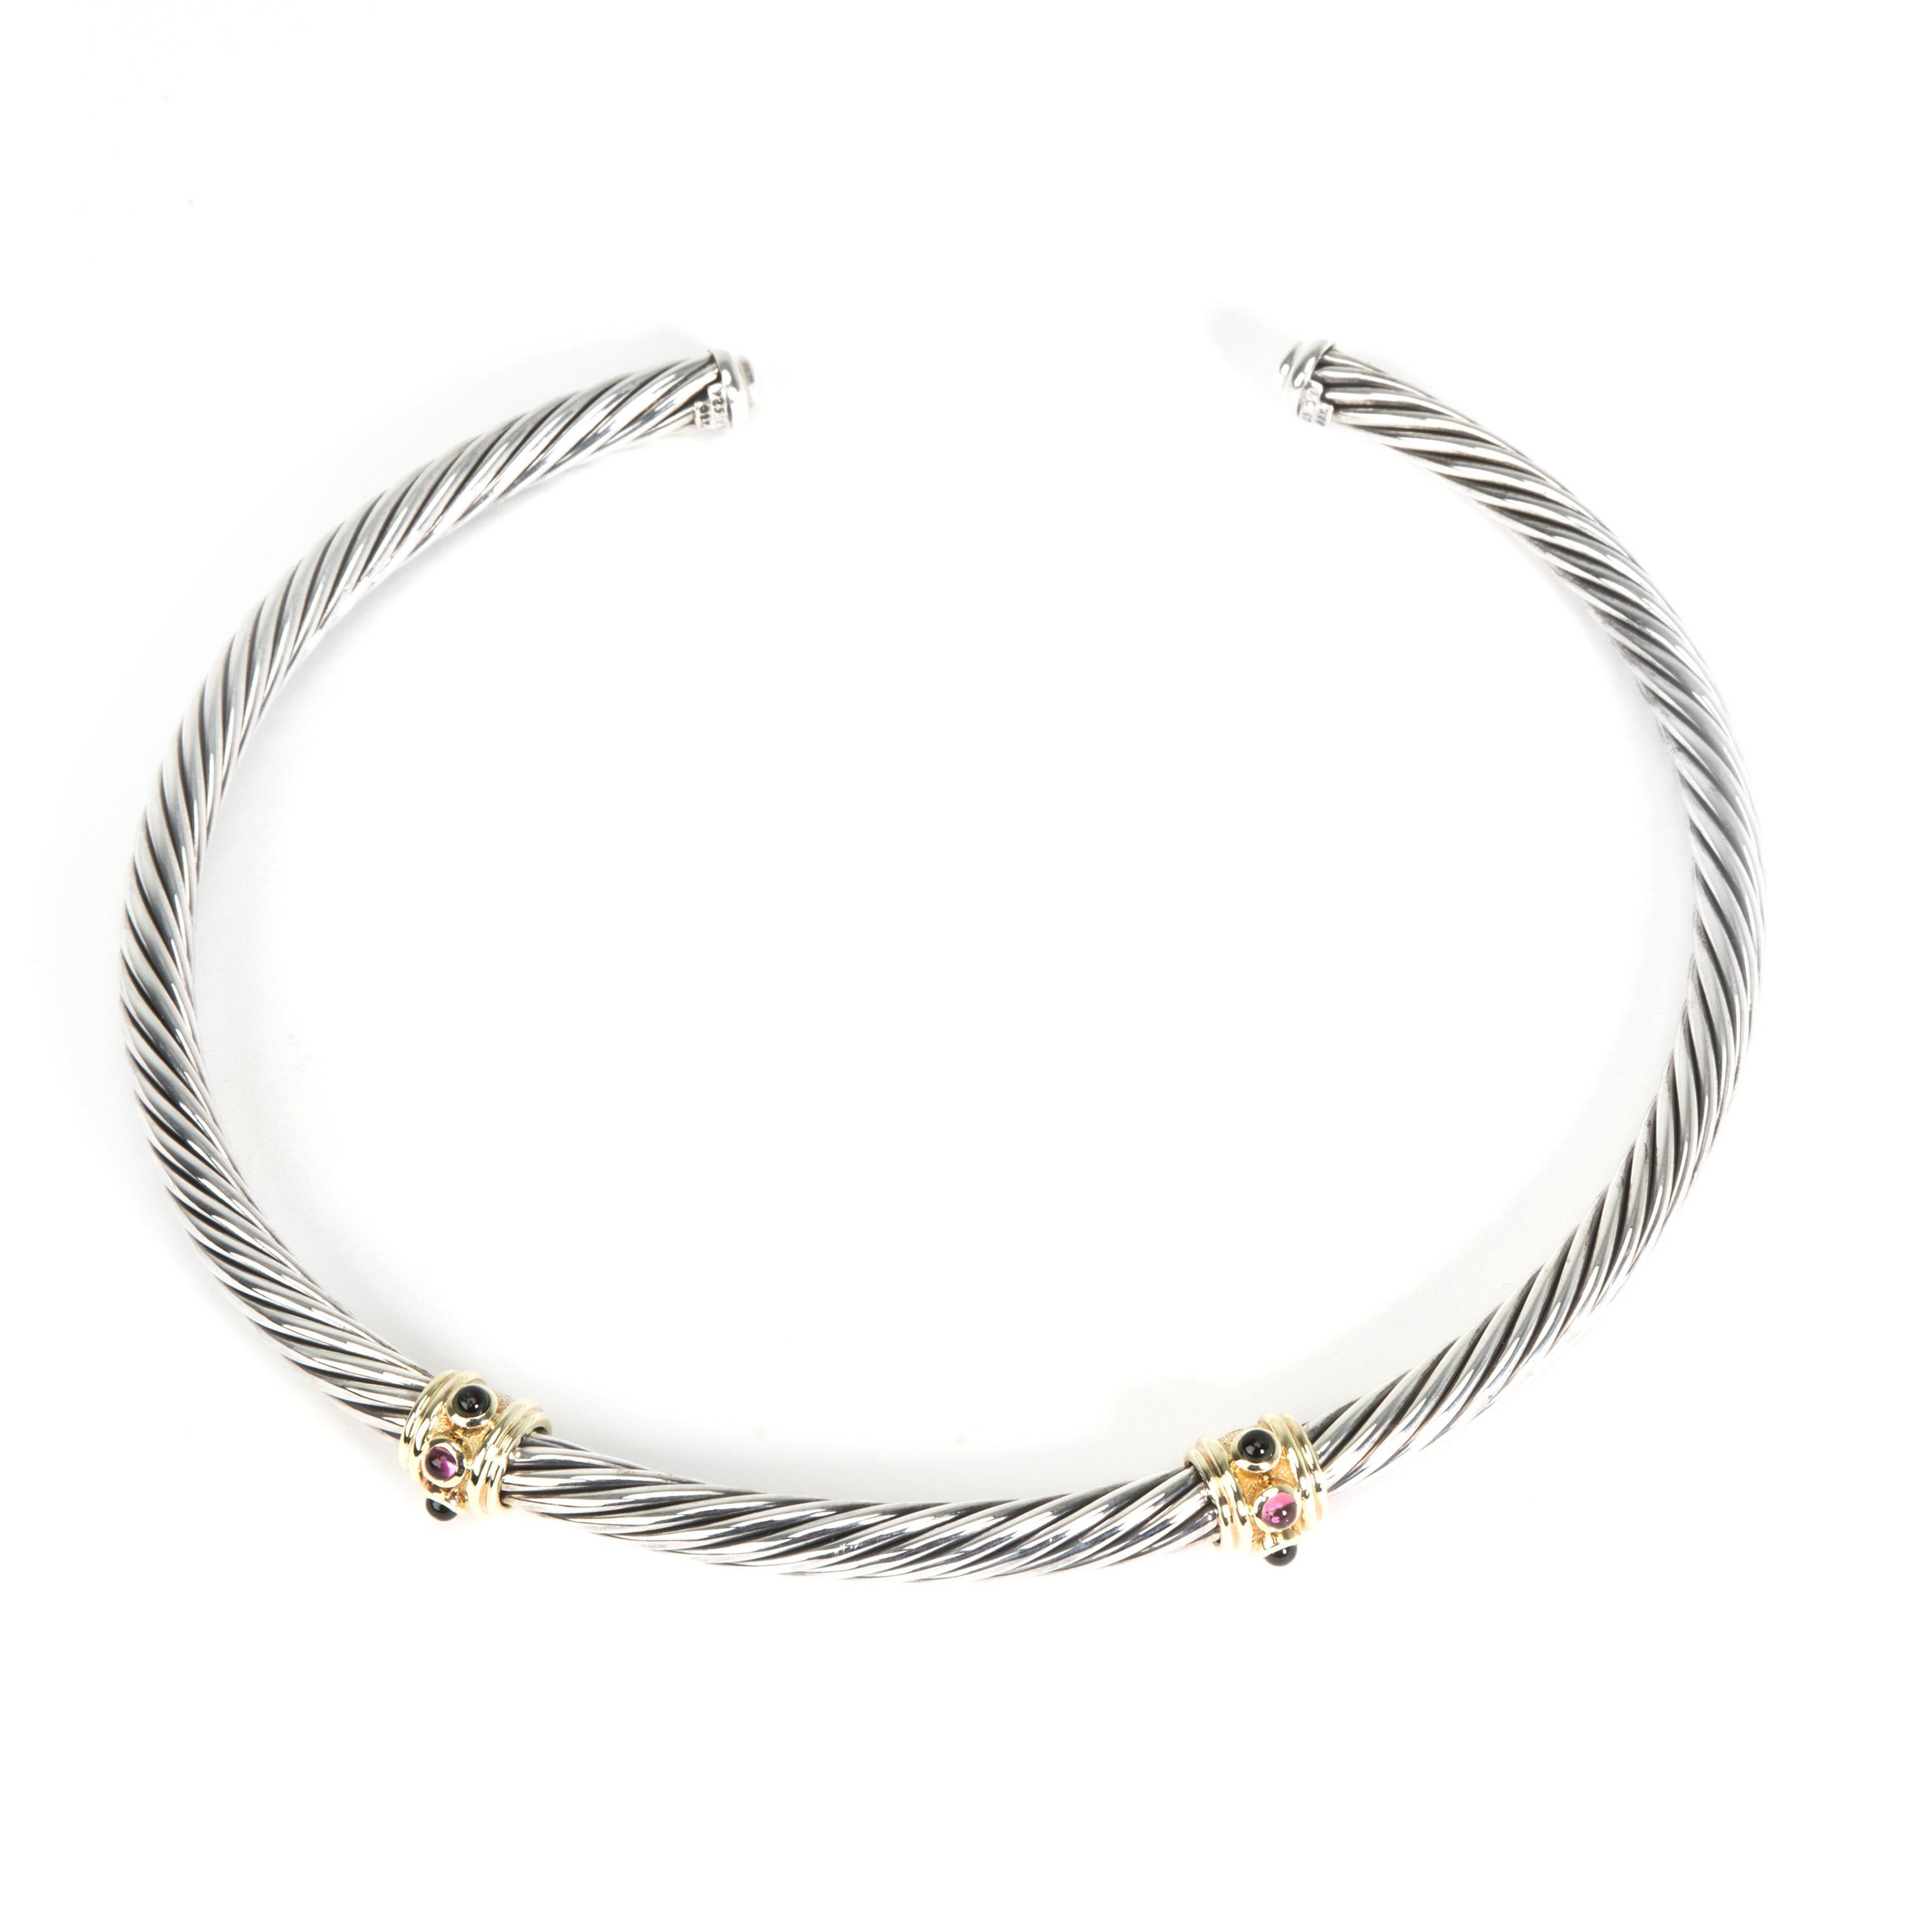 Women's David Yurman Renaissance Cable Choker Necklace in Sterling Silver